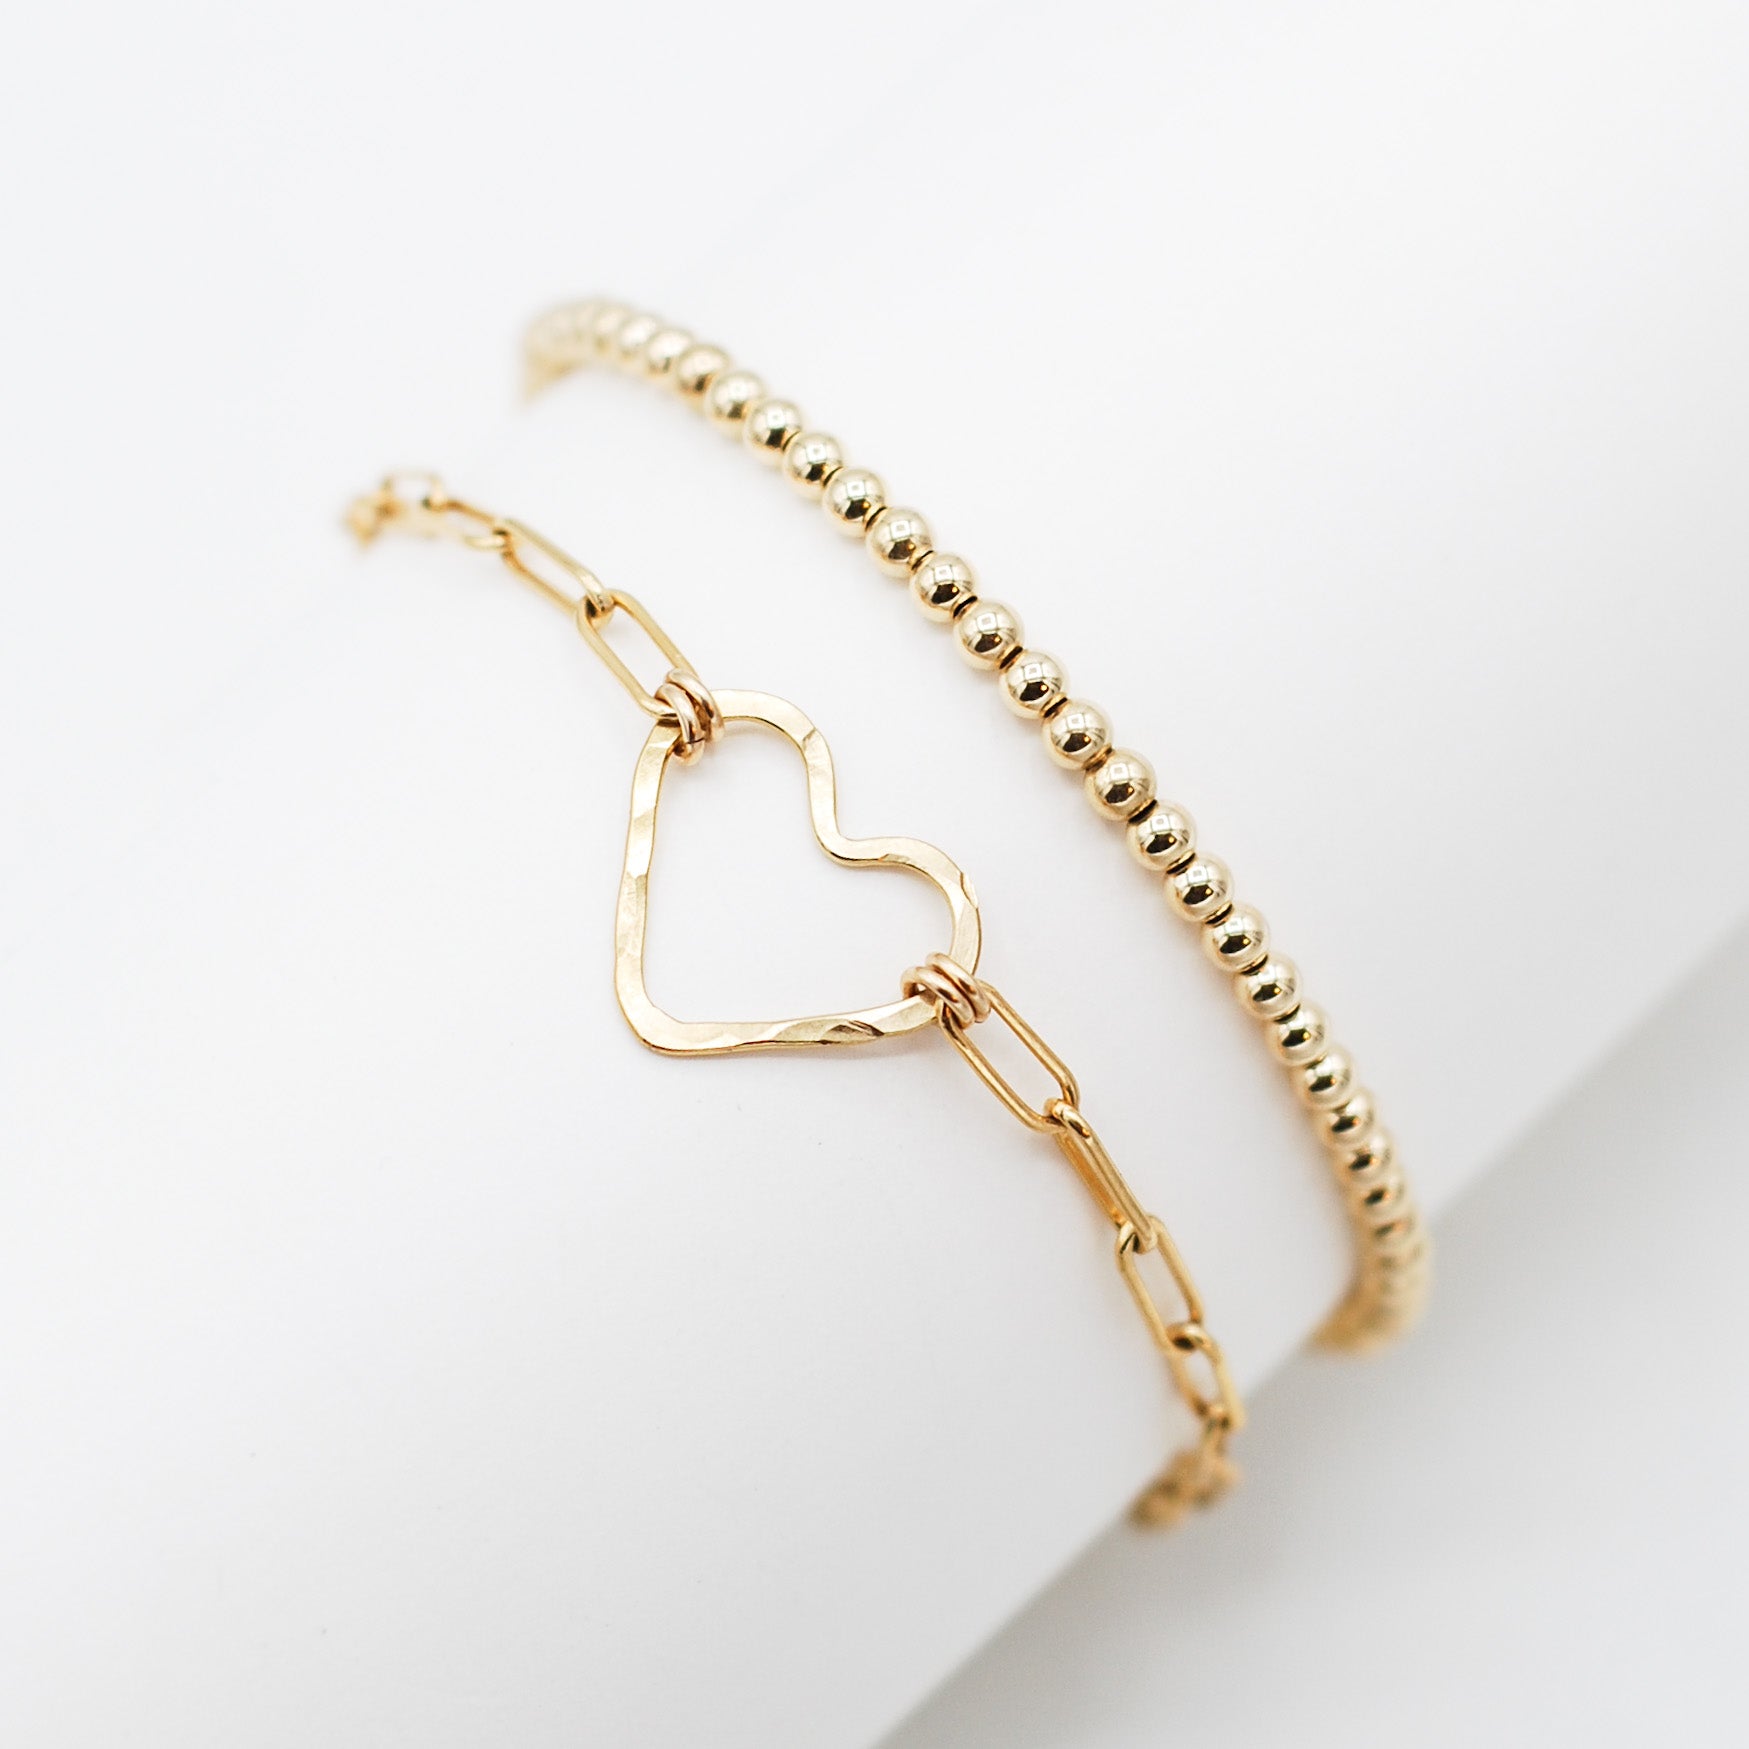 14k Gold Filled Heart & Beaded Lux Bracelet Set